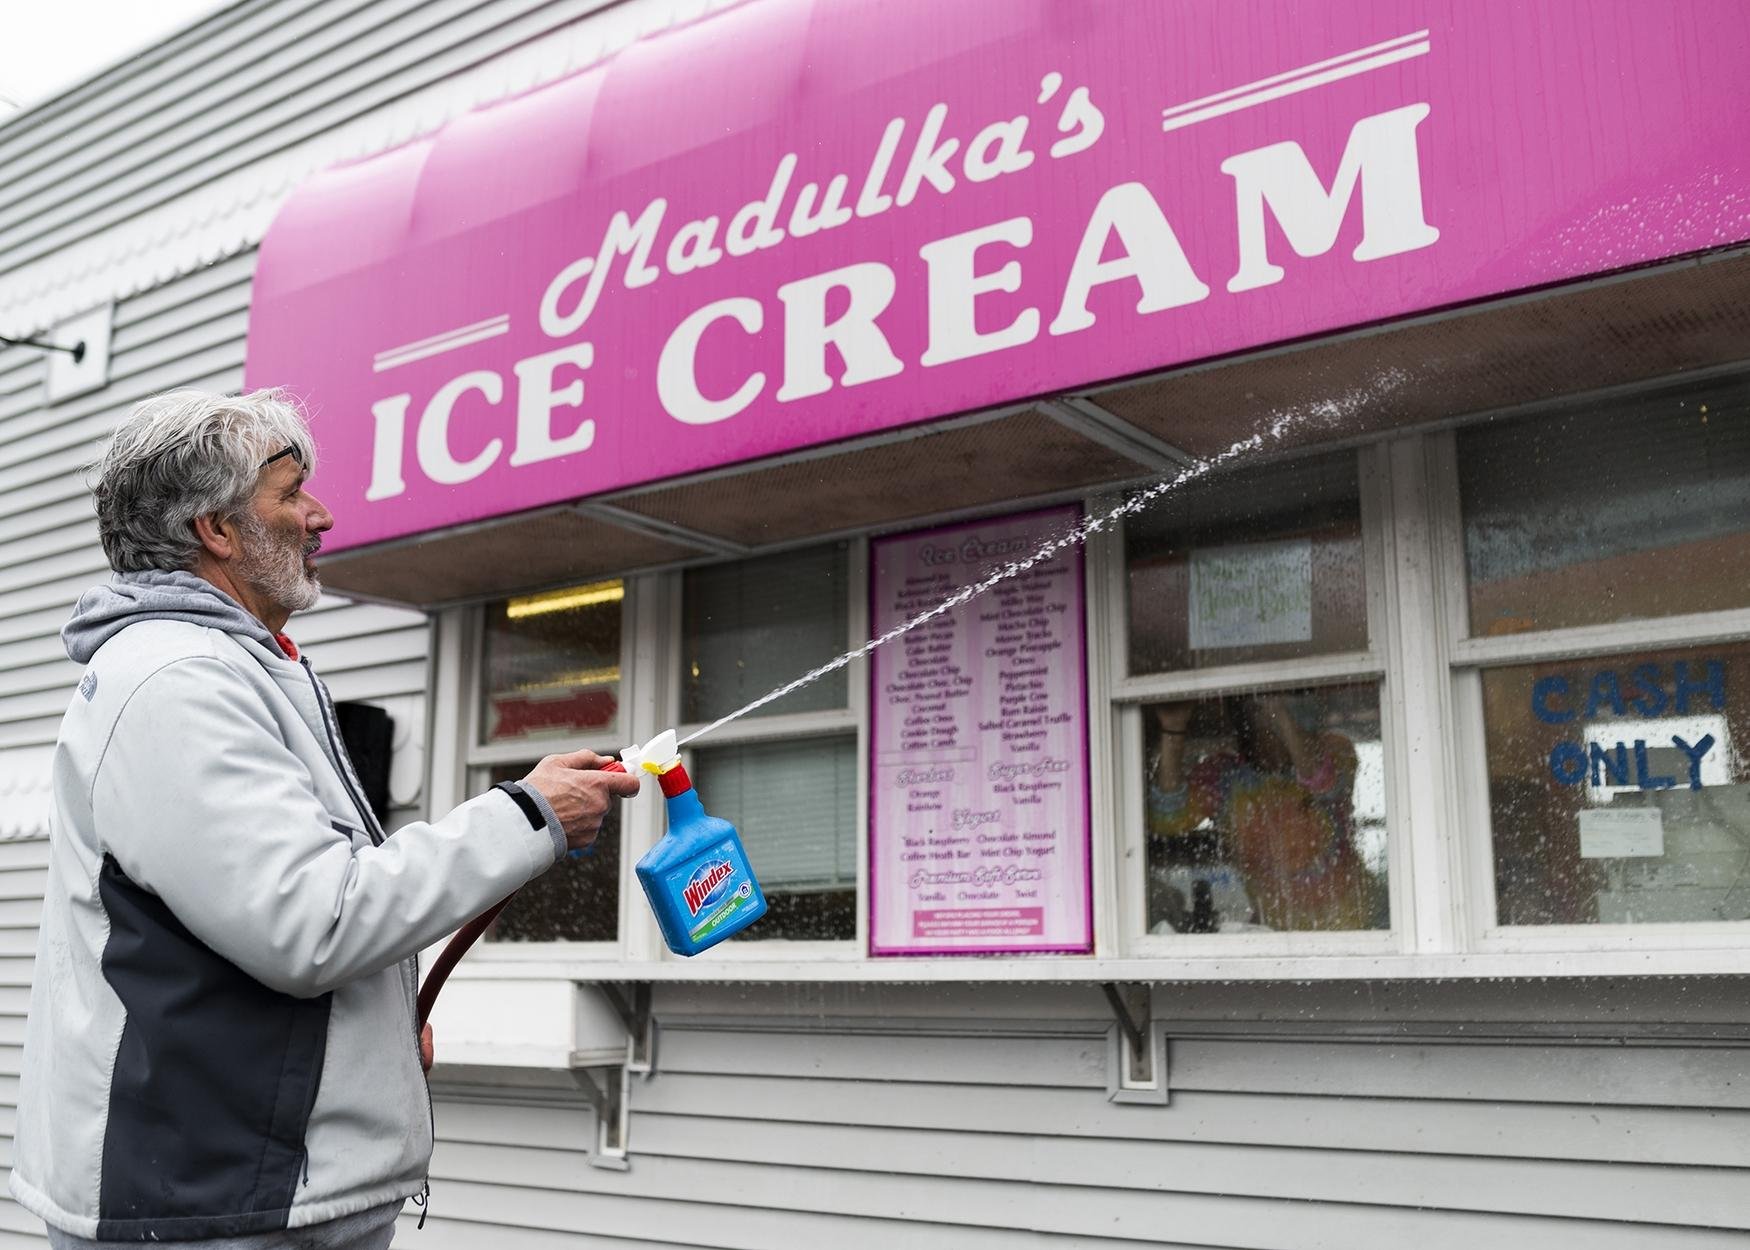 Malduka's Ice Cream